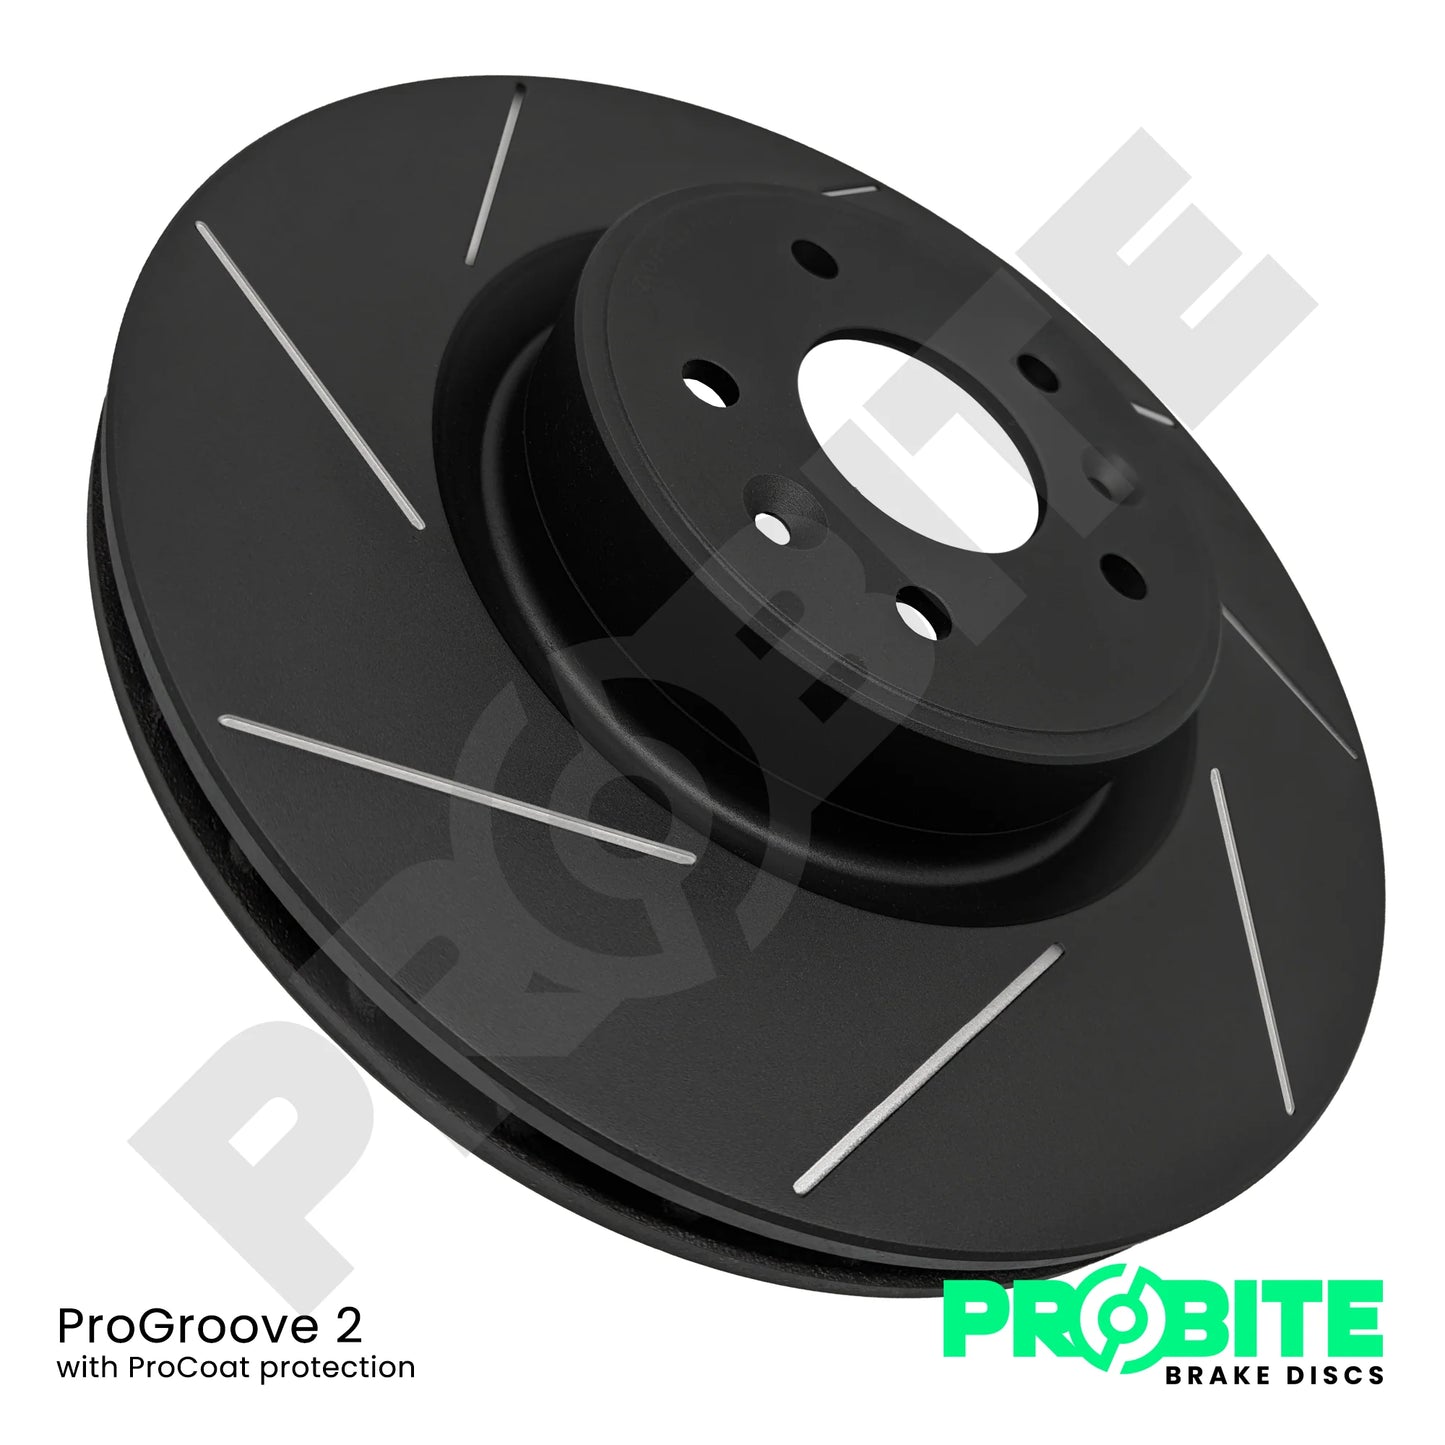 Probite 312mm Front Brake Discs for Skoda Octavia vRS Mk1 1.8T & Fabia vRS Mk1